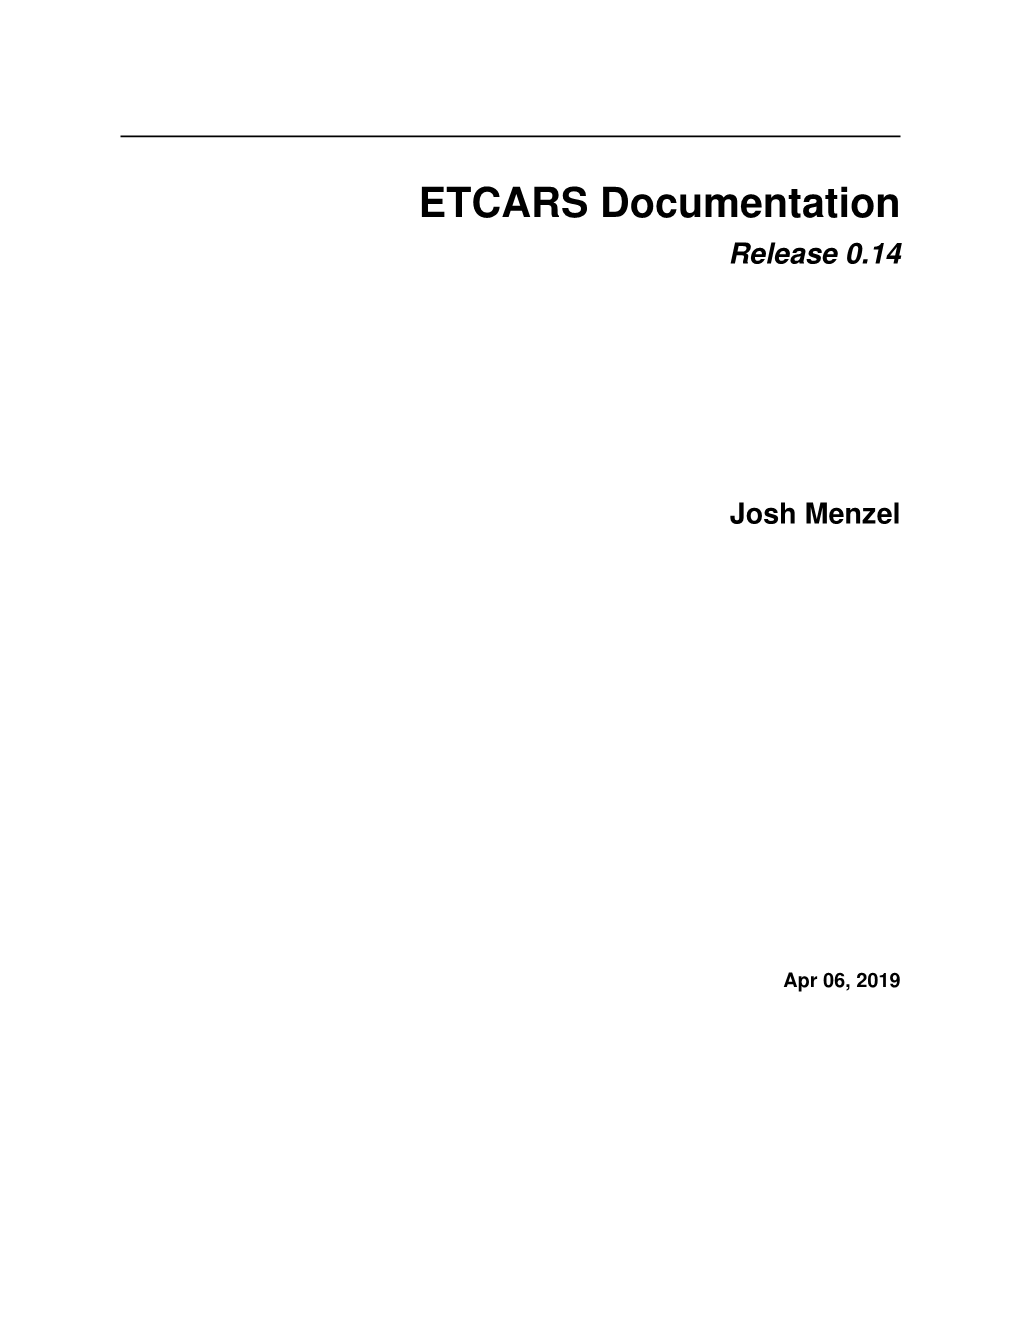 ETCARS Documentation Release 0.14